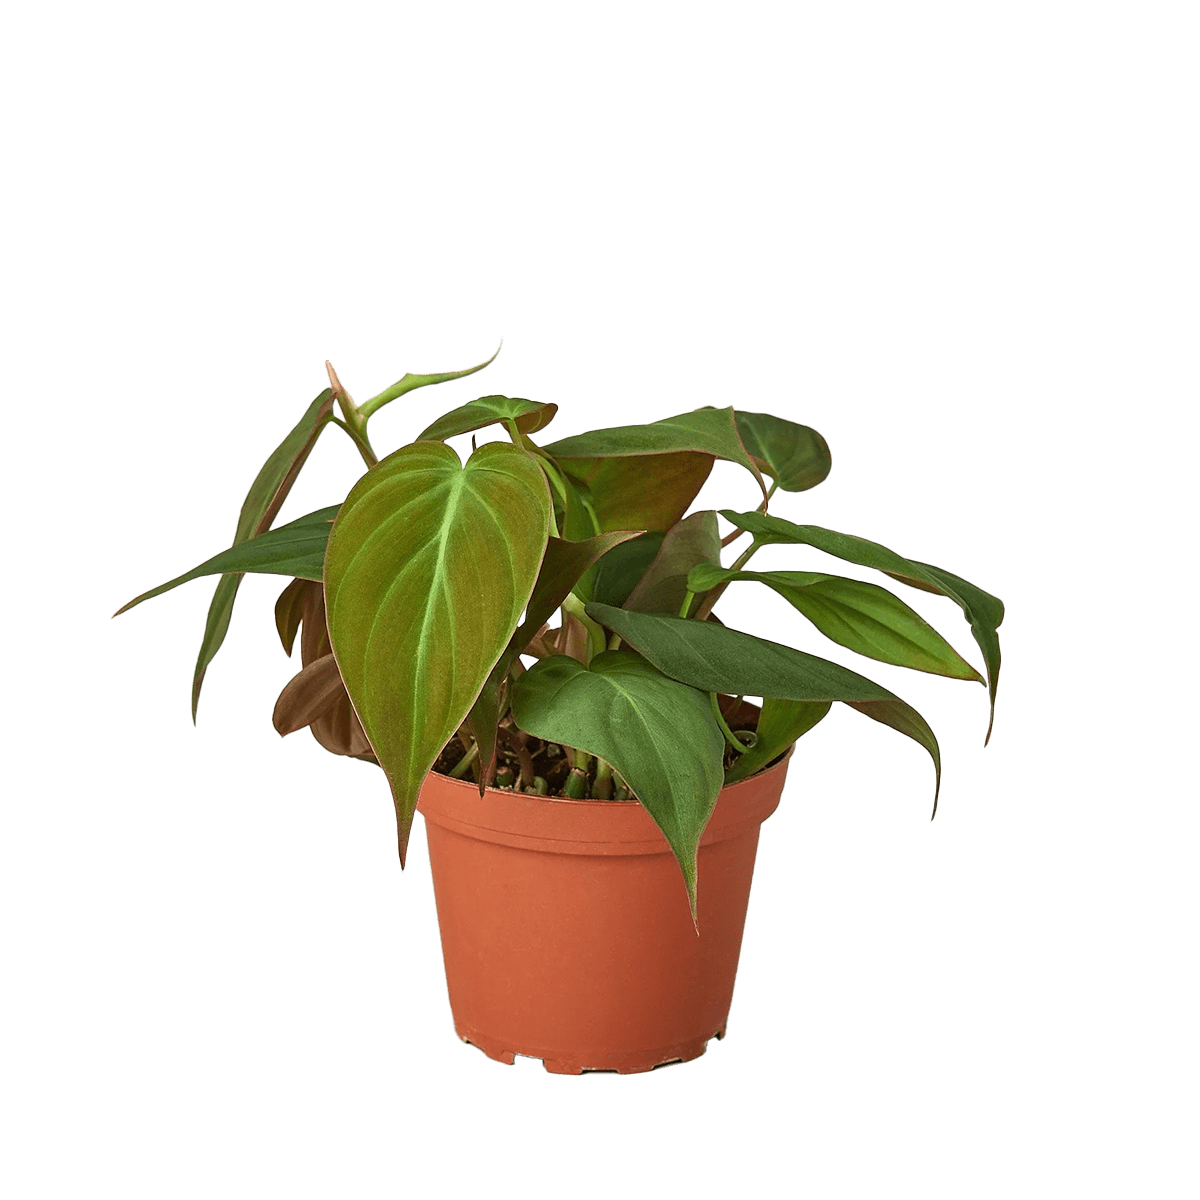 philodendron micans - best online plant nursery | houseplantsale.com - houseplants for sale online | best indoor plants | forget me not flower market